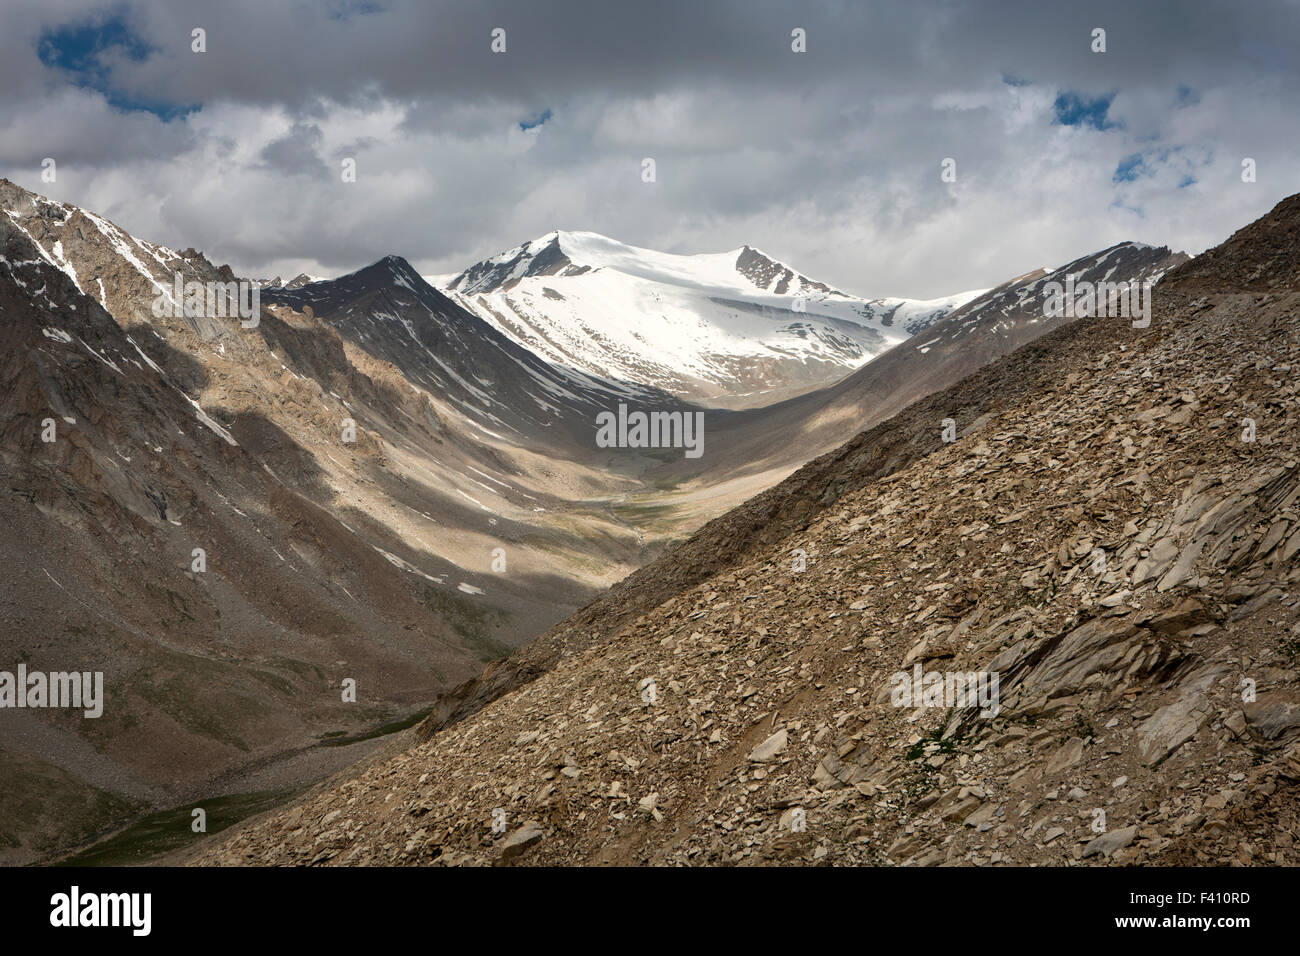 India, Jammu & Kashmir, Ladakh, Leh, Ladakh range mountains and stream at Khardung La pass Stock Photo